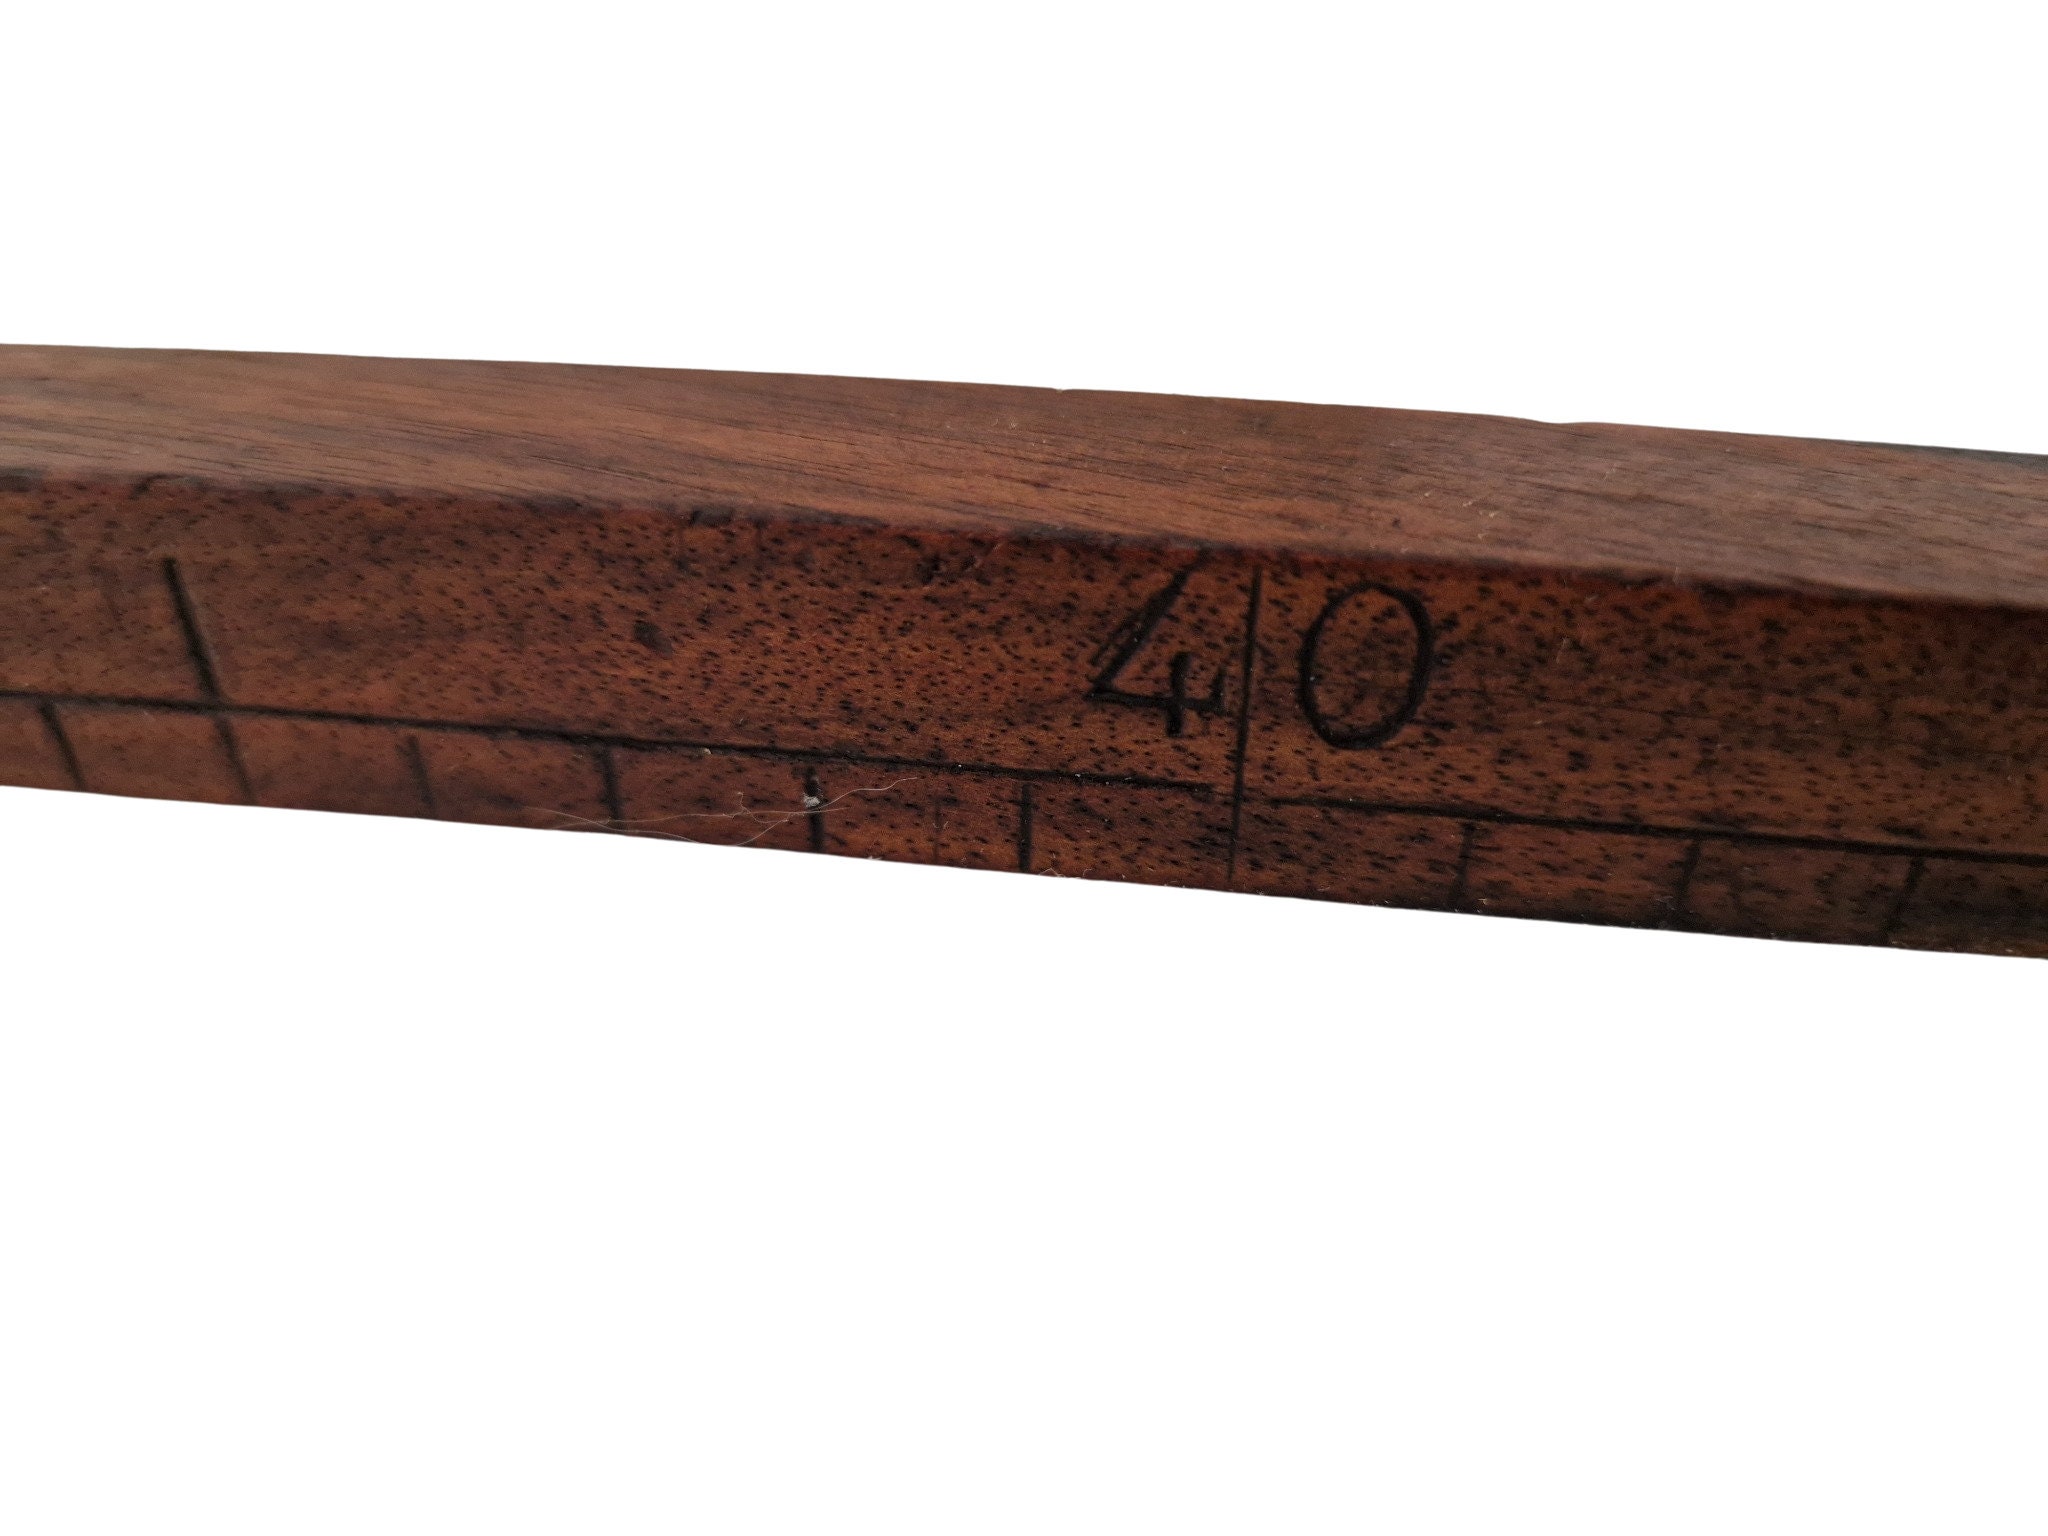 Half Meter Stick, Hardwood 50cm with Vertical Reading Graduated in